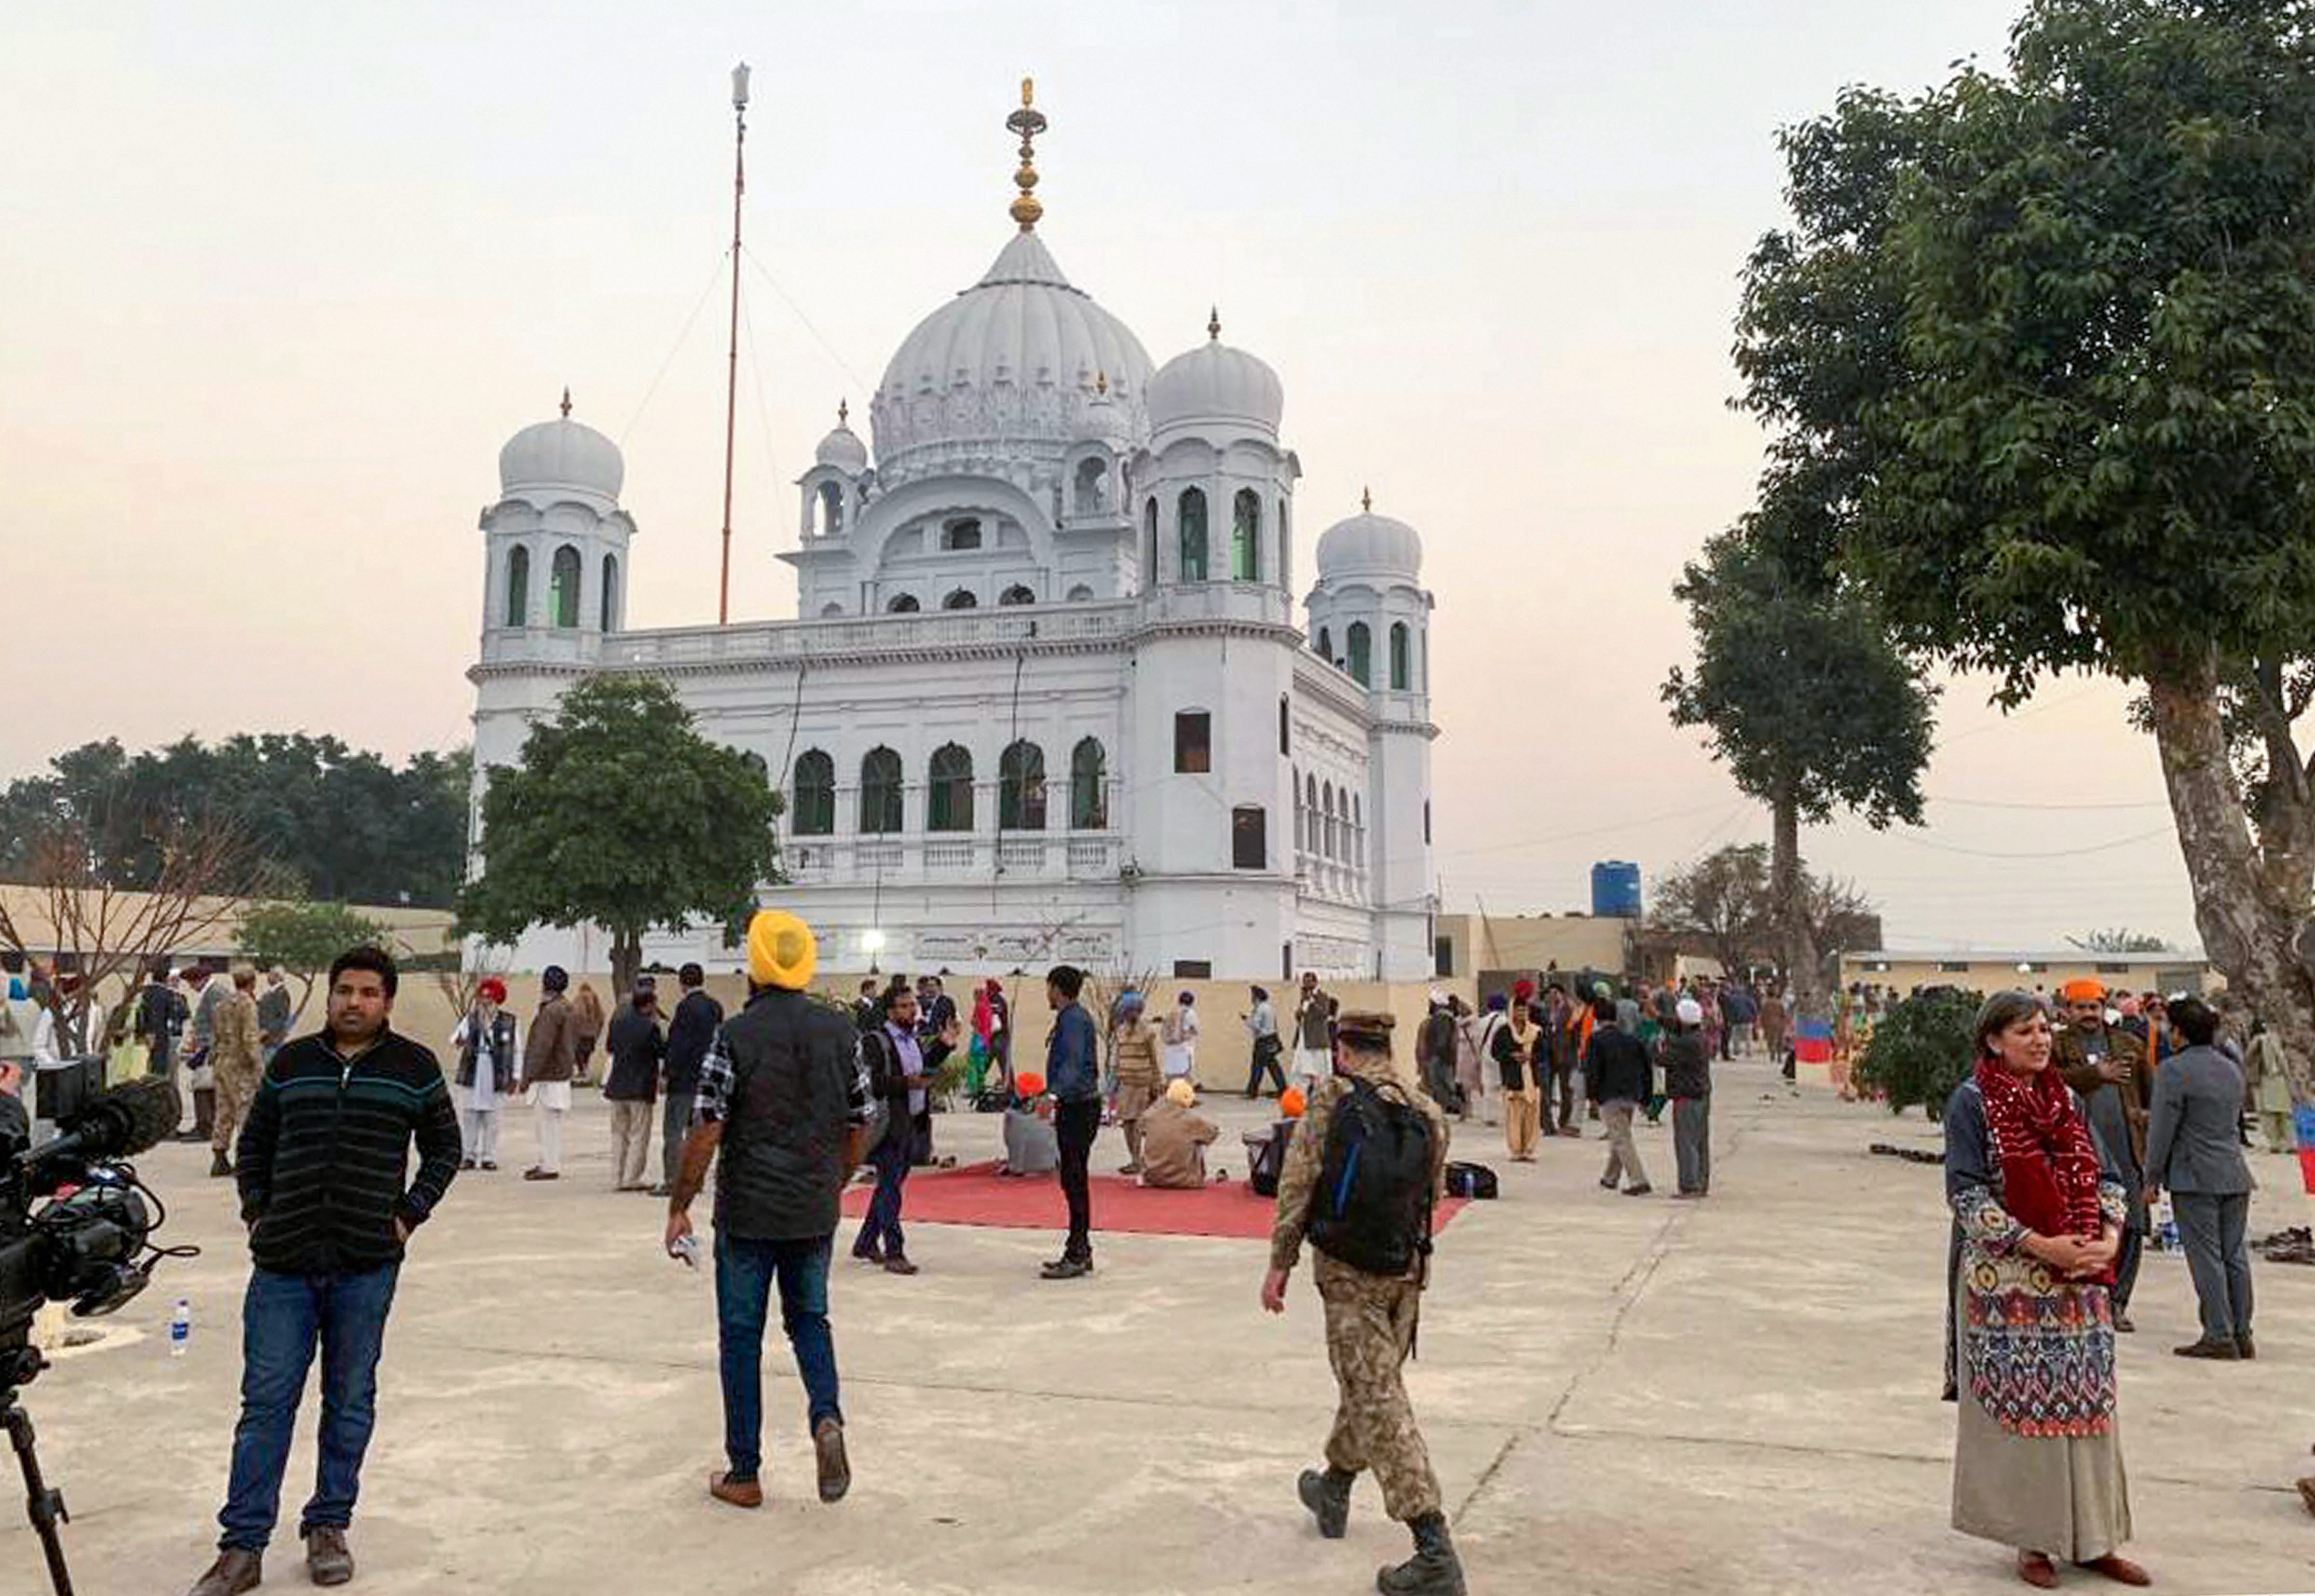 Sikh pilgrims visit the shrine of their spiritual leader Guru Nanak Dev in Kartarpur, Pakistan, on Wednesday, November 28, 2018. Pakistan Prime Minister Imran Khan launched the ground-breaking ceremony of the religious corridor between India and Pakistan.